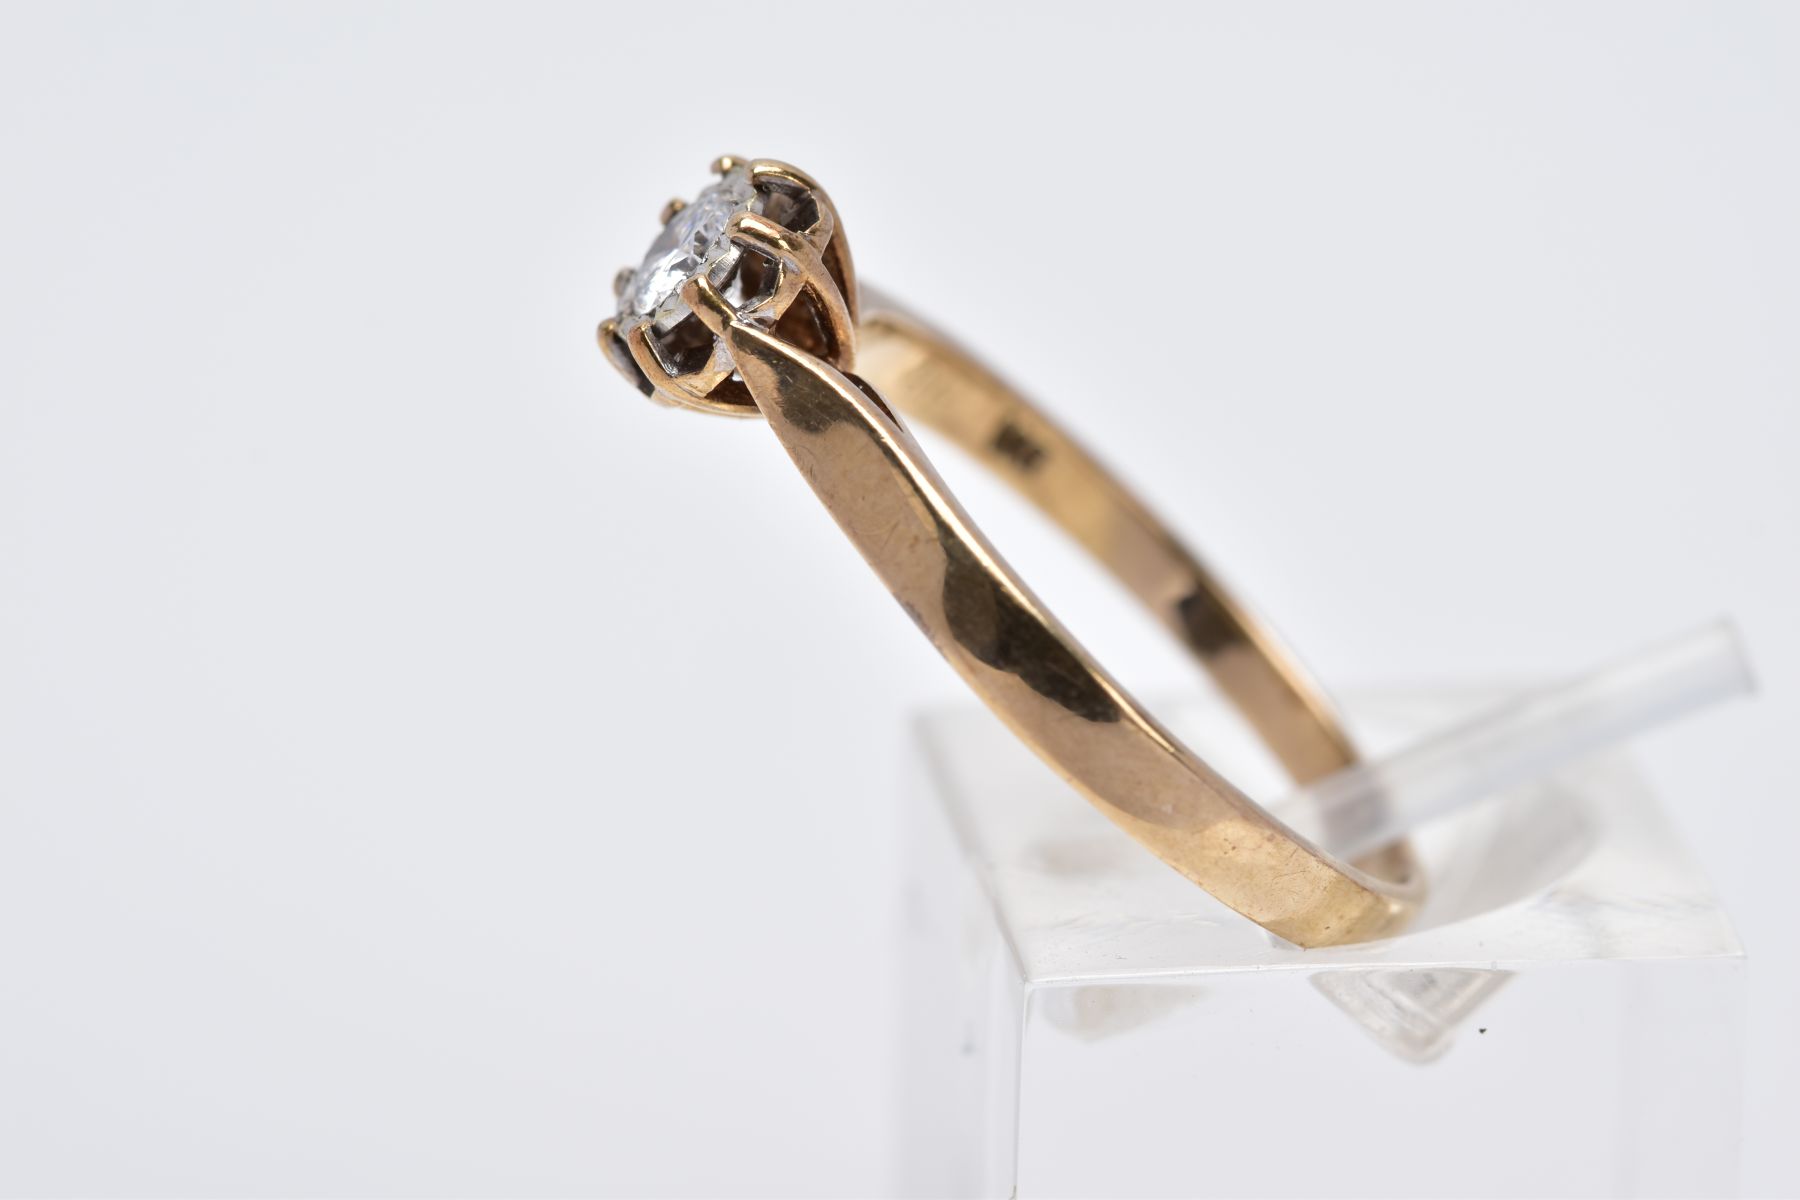 A 9CT GOLD SINGLE STONE DIAMOND RING, designed with an illusion set round brilliant cut diamond - Image 2 of 3